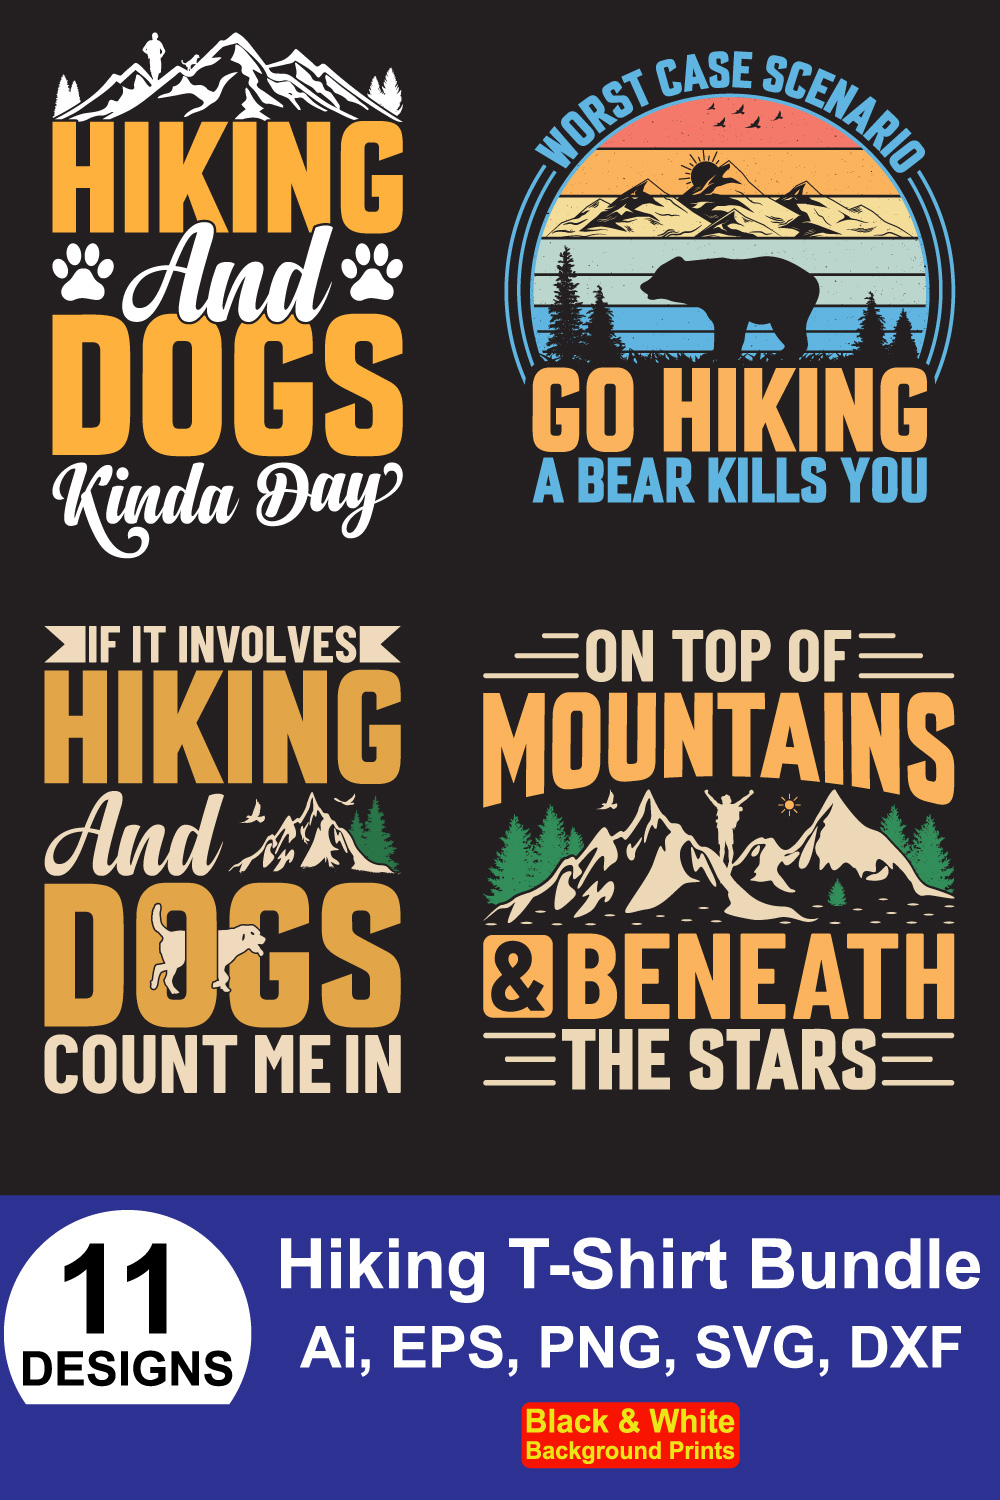 Hiking T-shirt Design Bundle pinterest image.